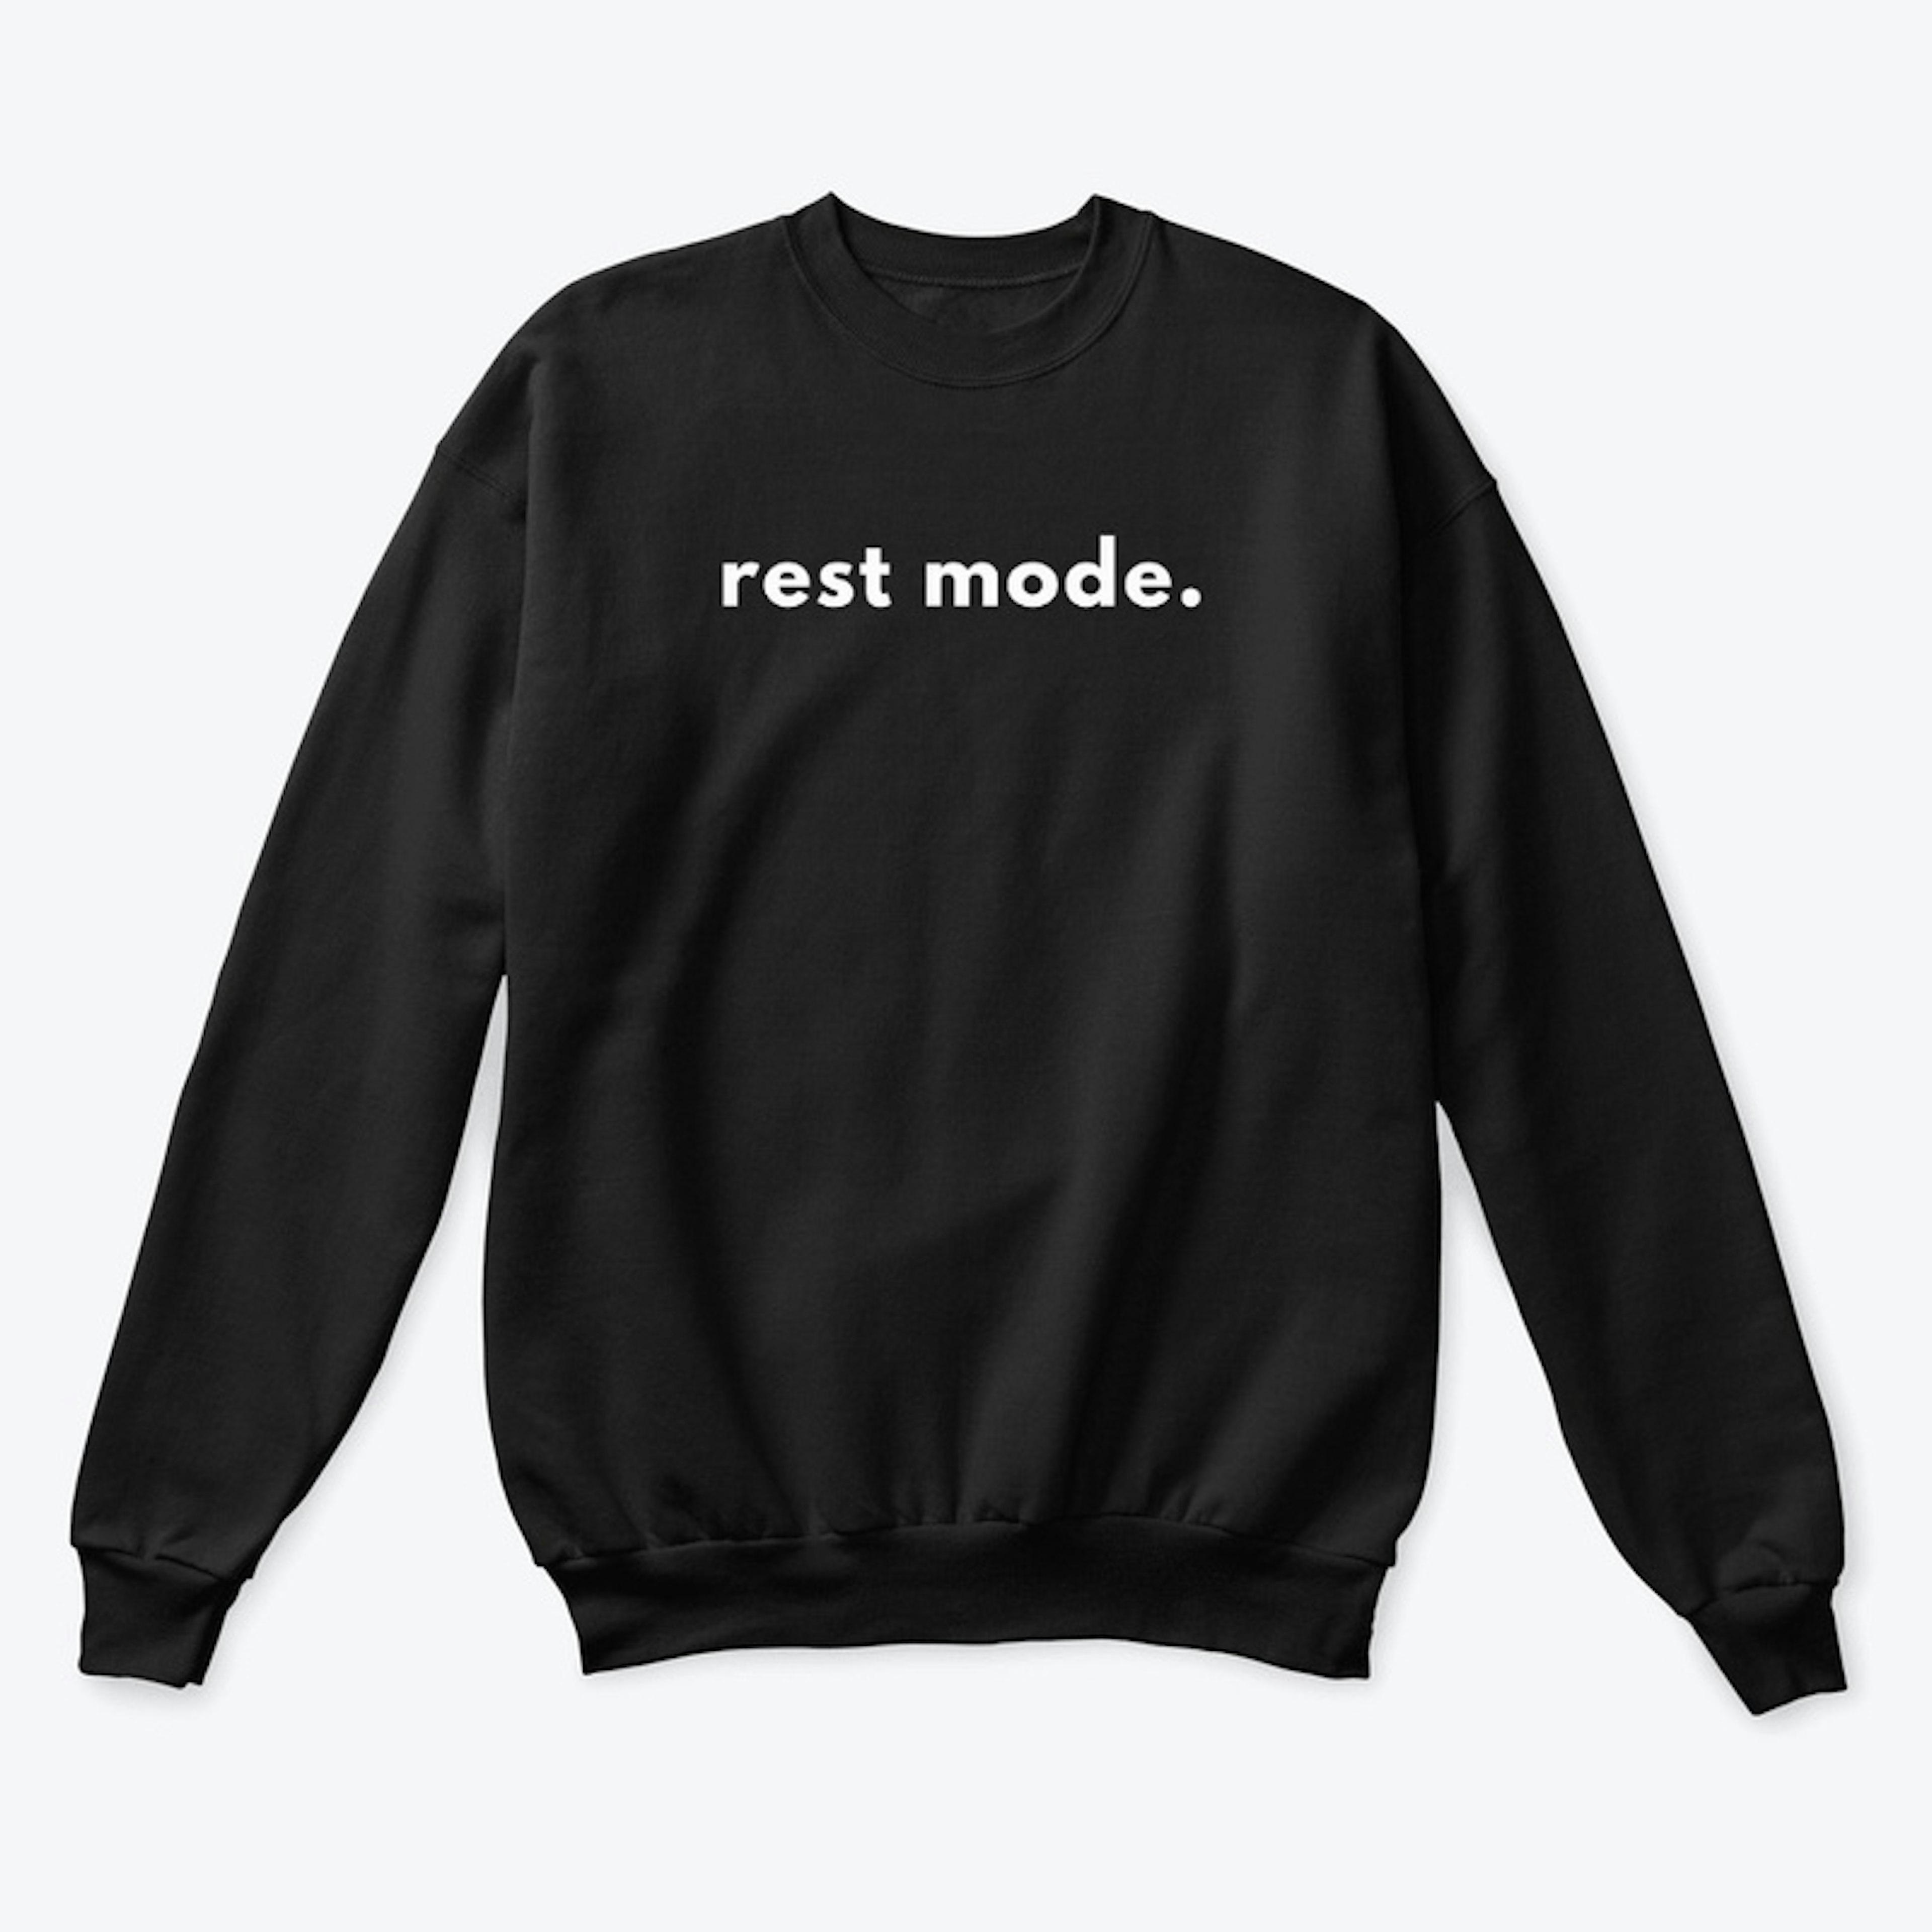 rest mode